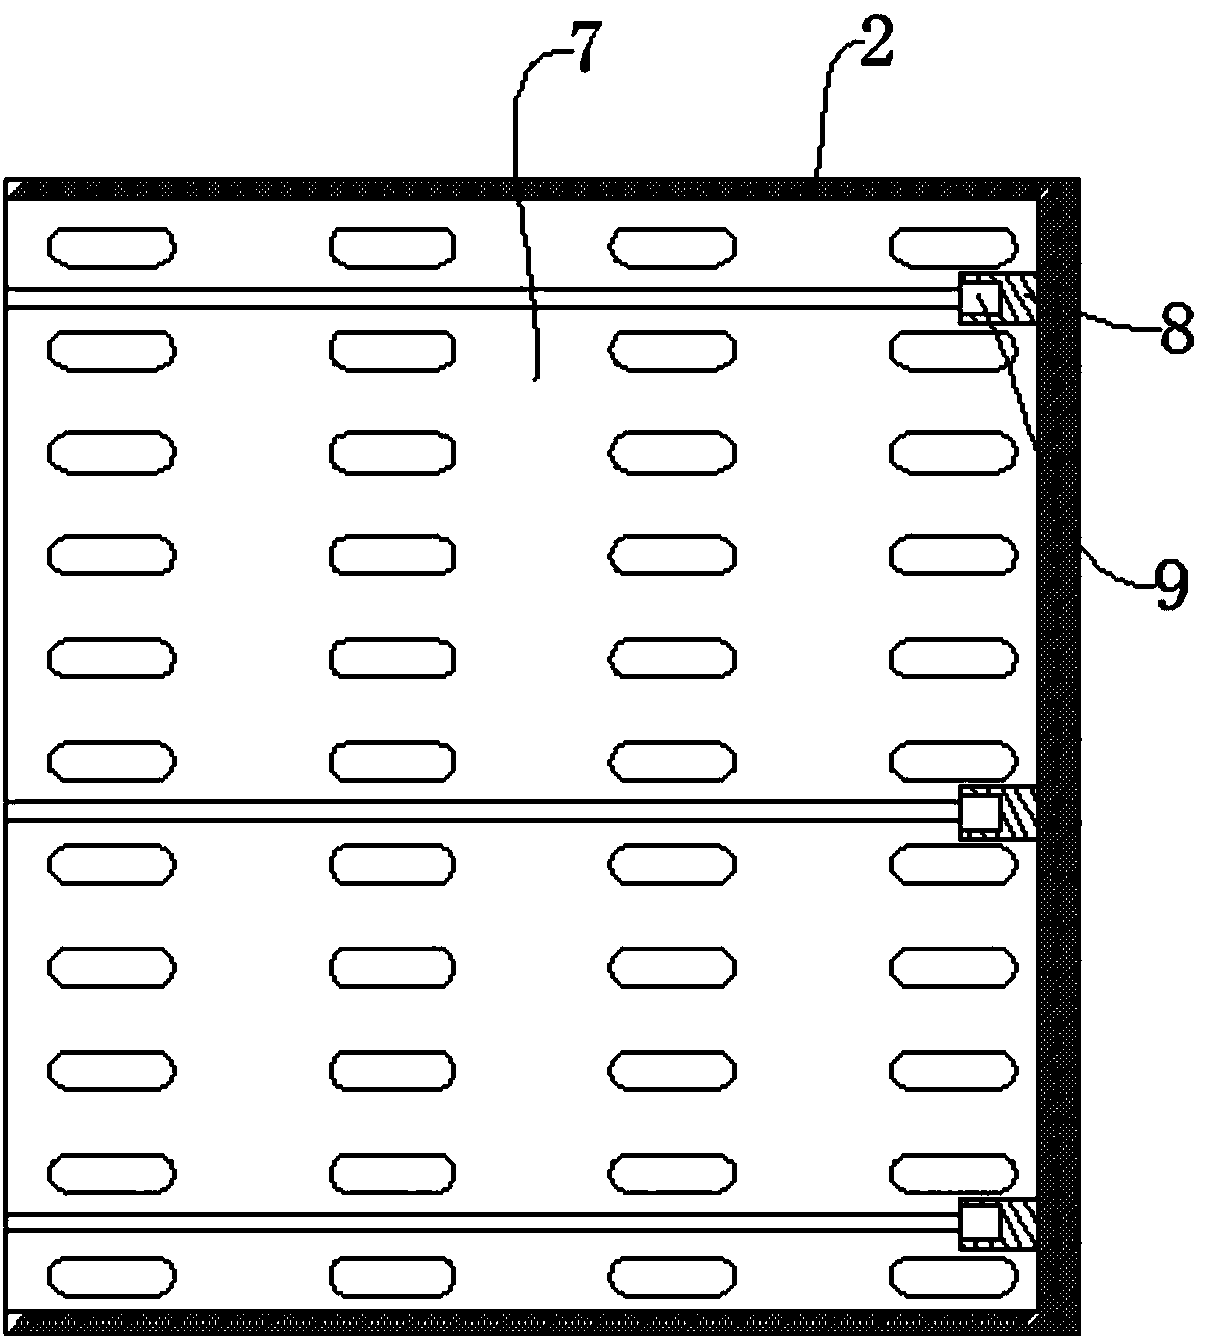 Anti-blocking partition bin lining plate